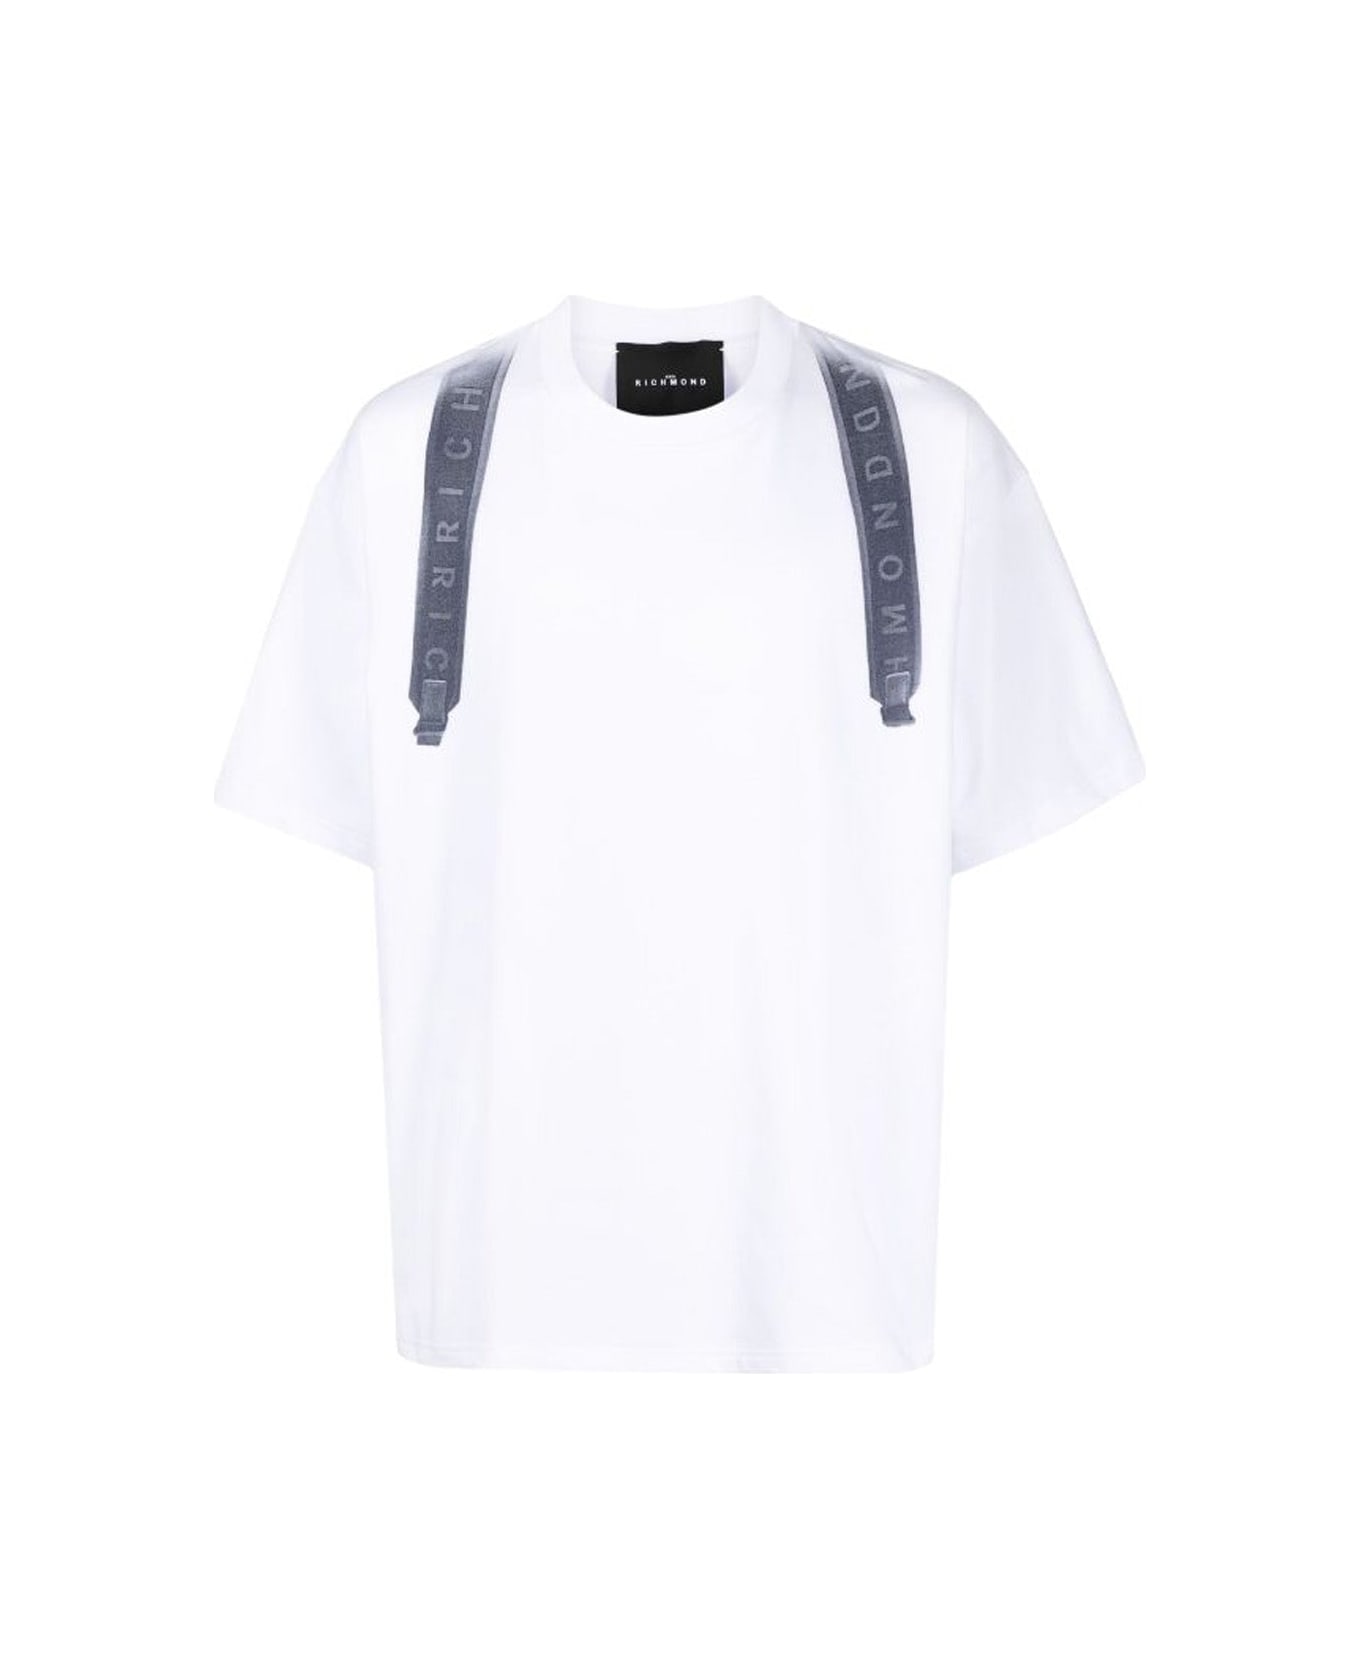 John Richmond 100% Cotton T-shirt With Heat Pressed Print On The Back. - Bianco シャツ